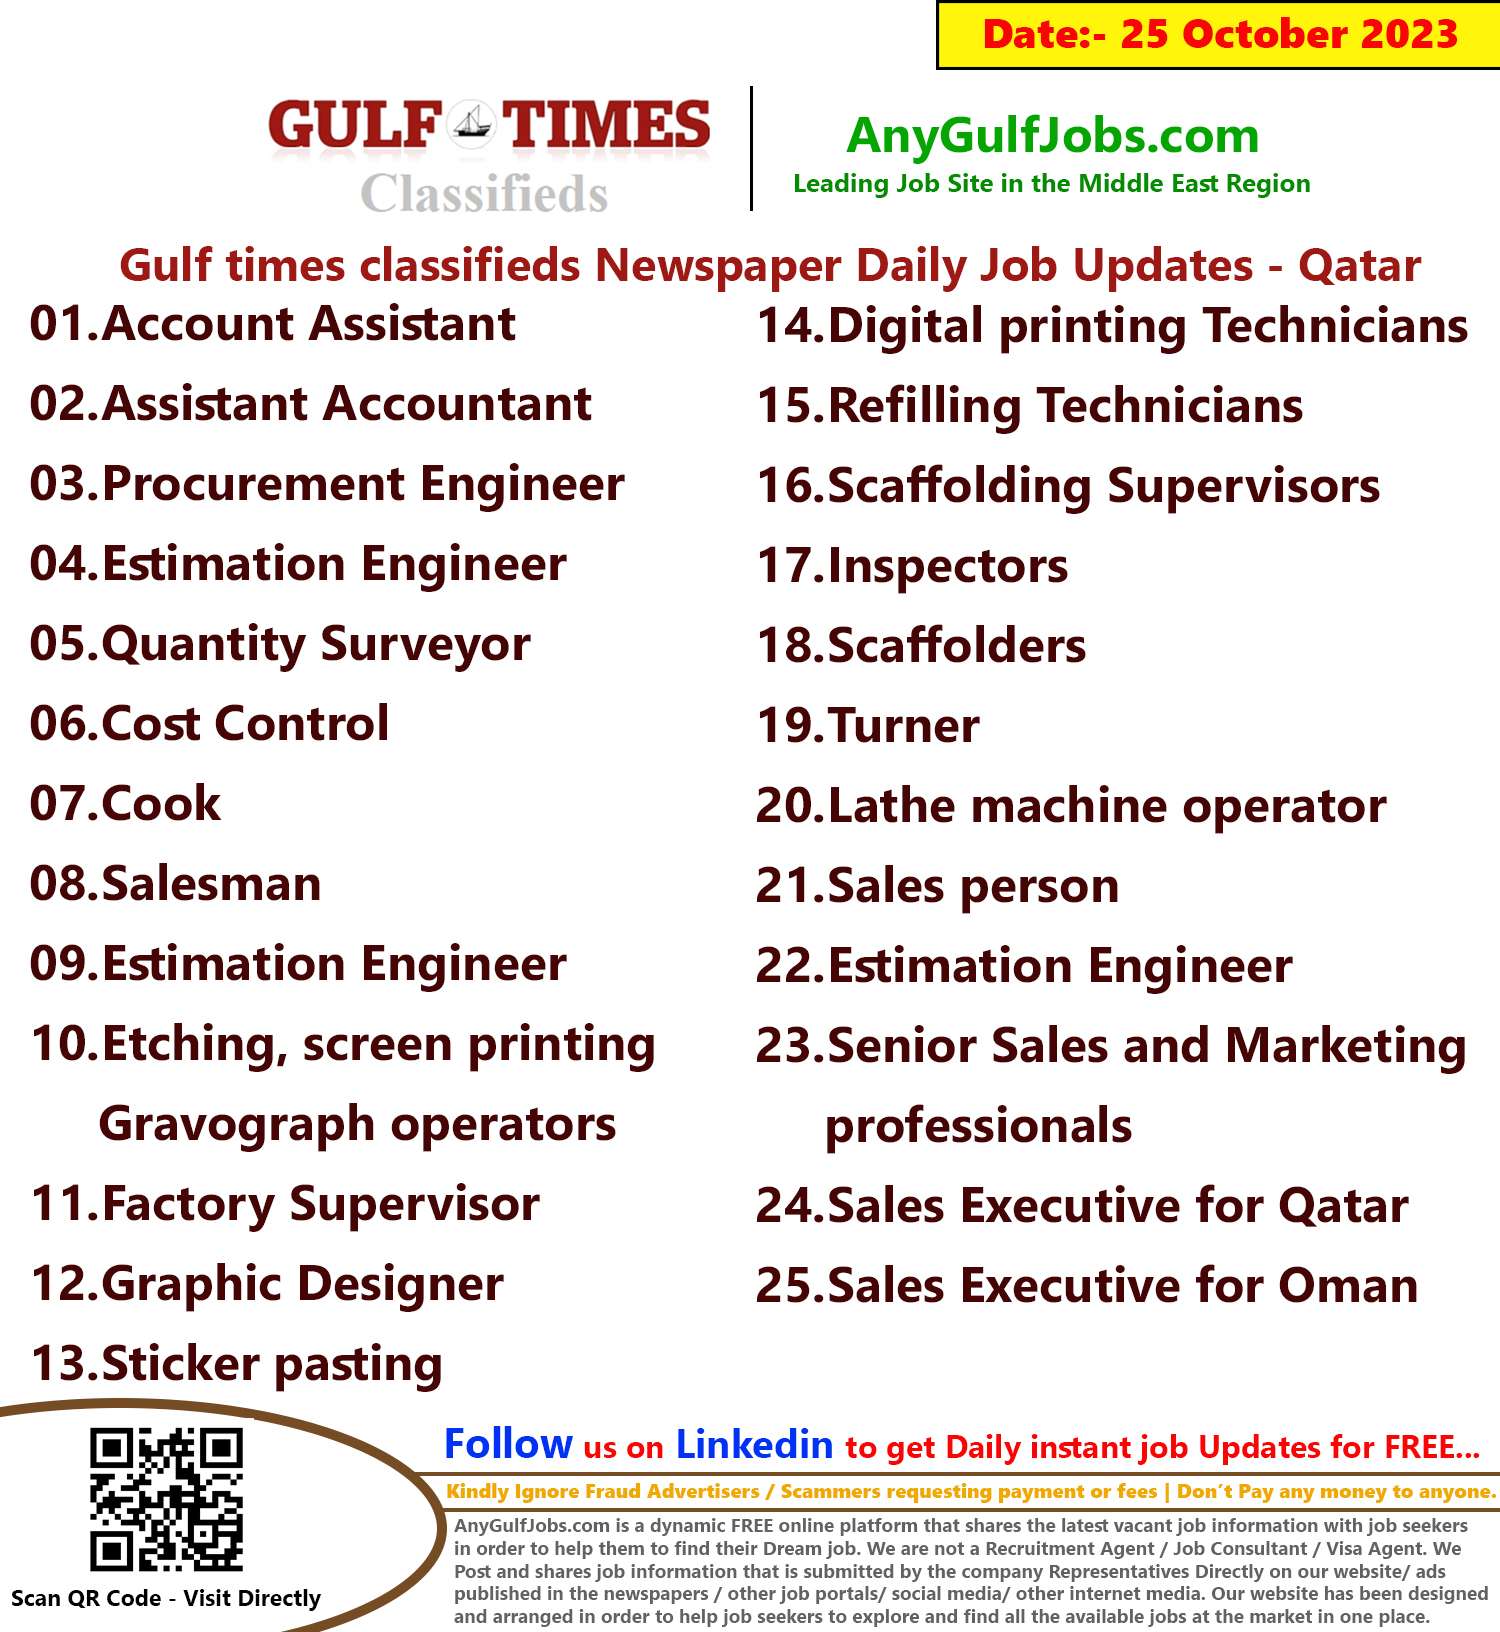 Gulf times classifieds Job Vacancies Qatar - 25 October 2023